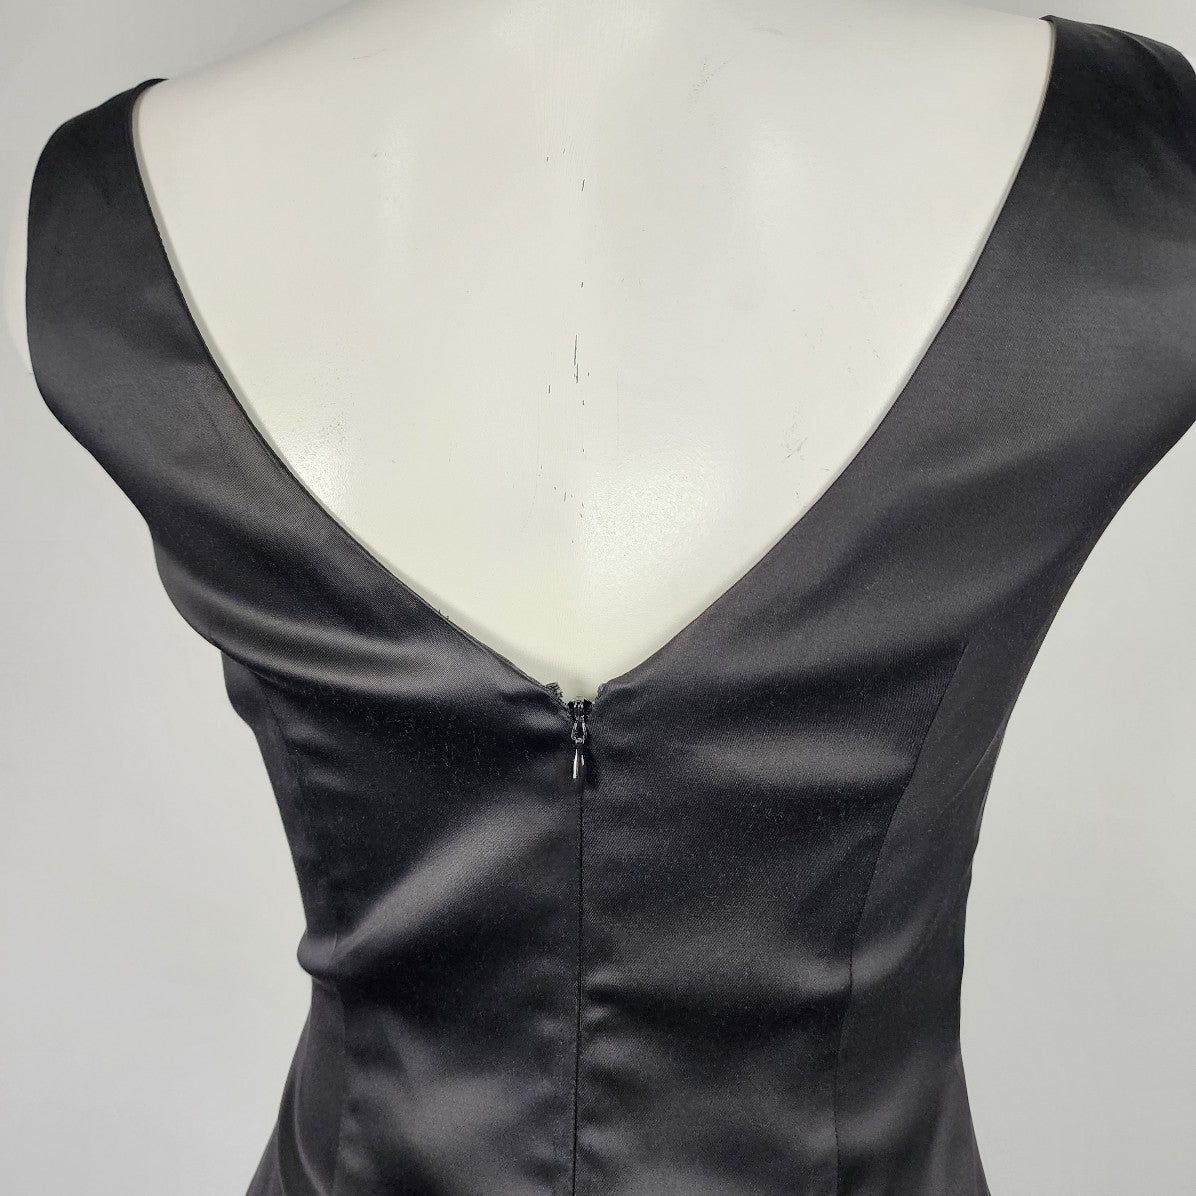 In Wear Black Satin Rhinestone Detail V-Neck Evening Dress Size 6